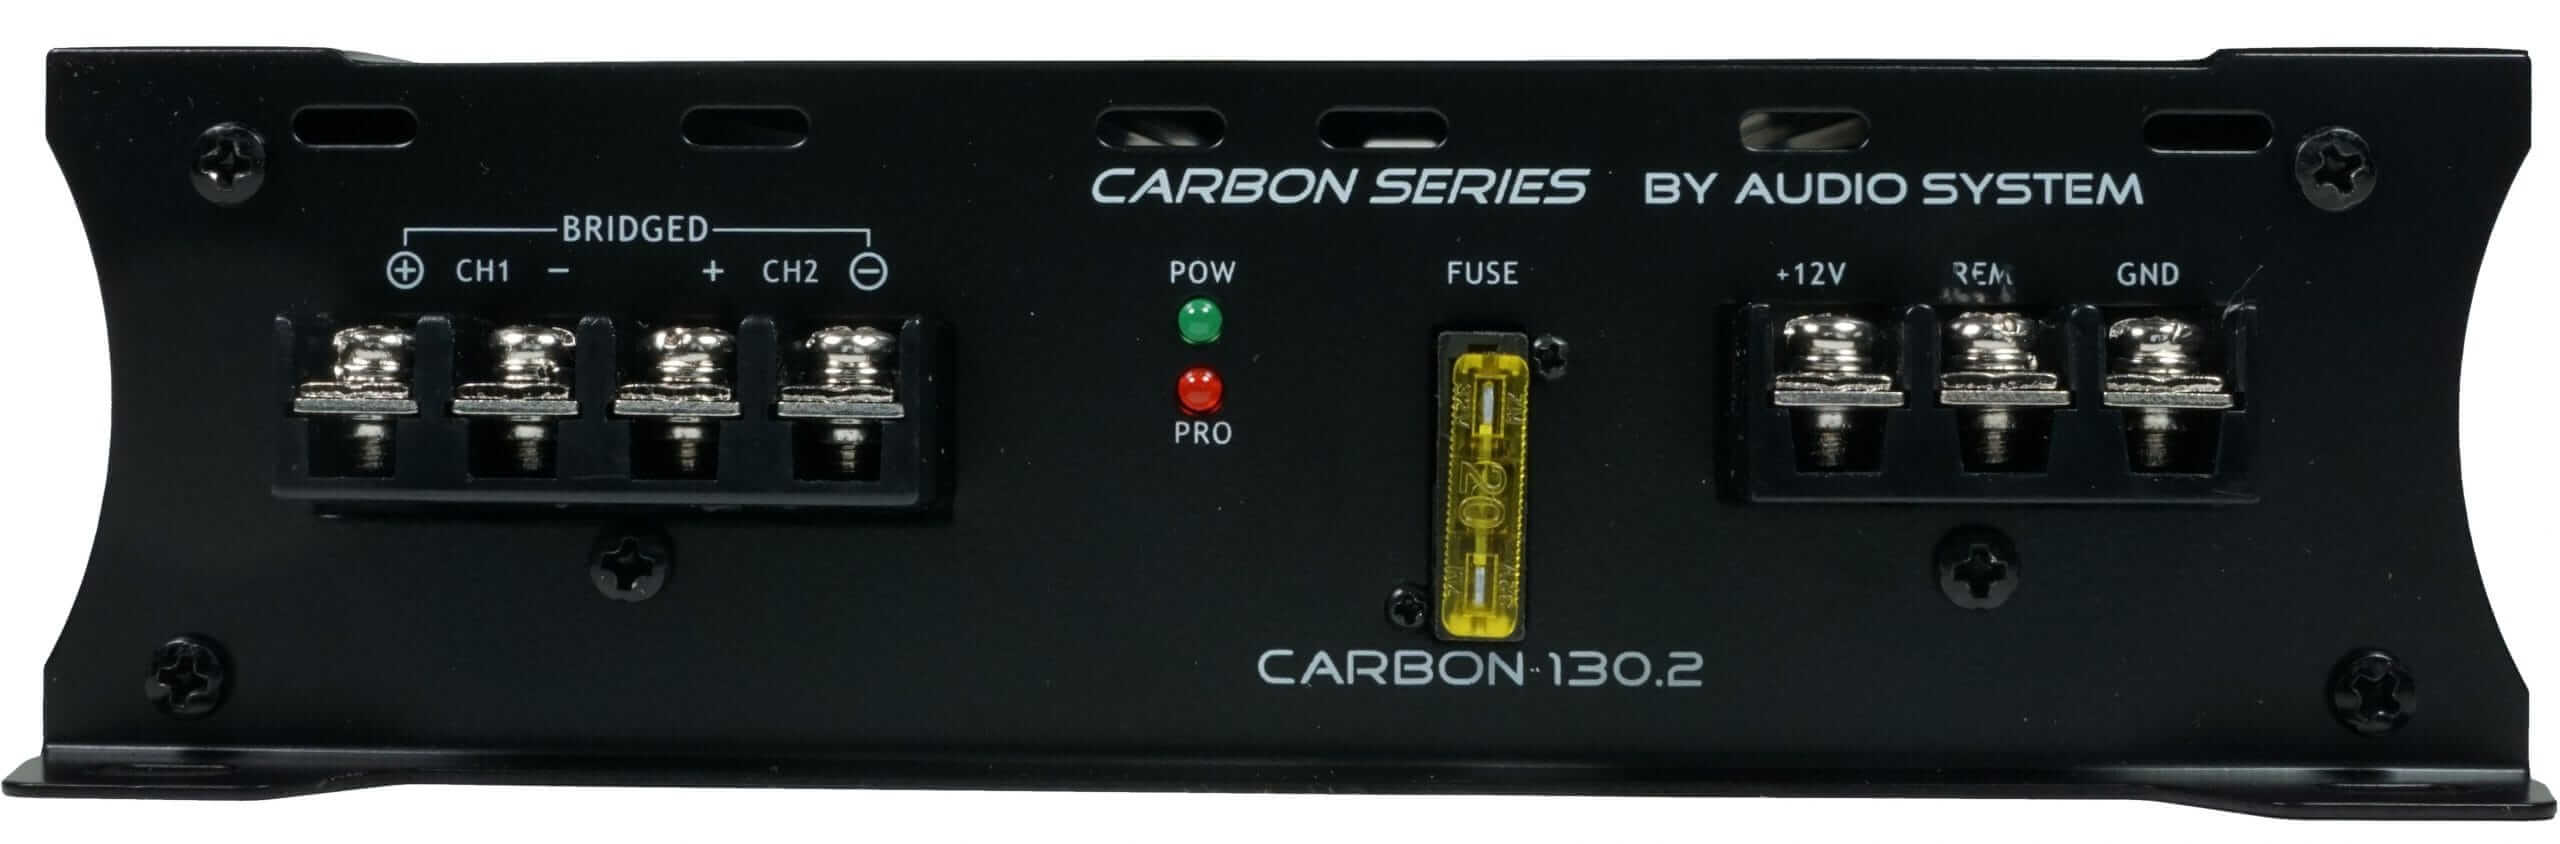 Audio System CARBON-130.2